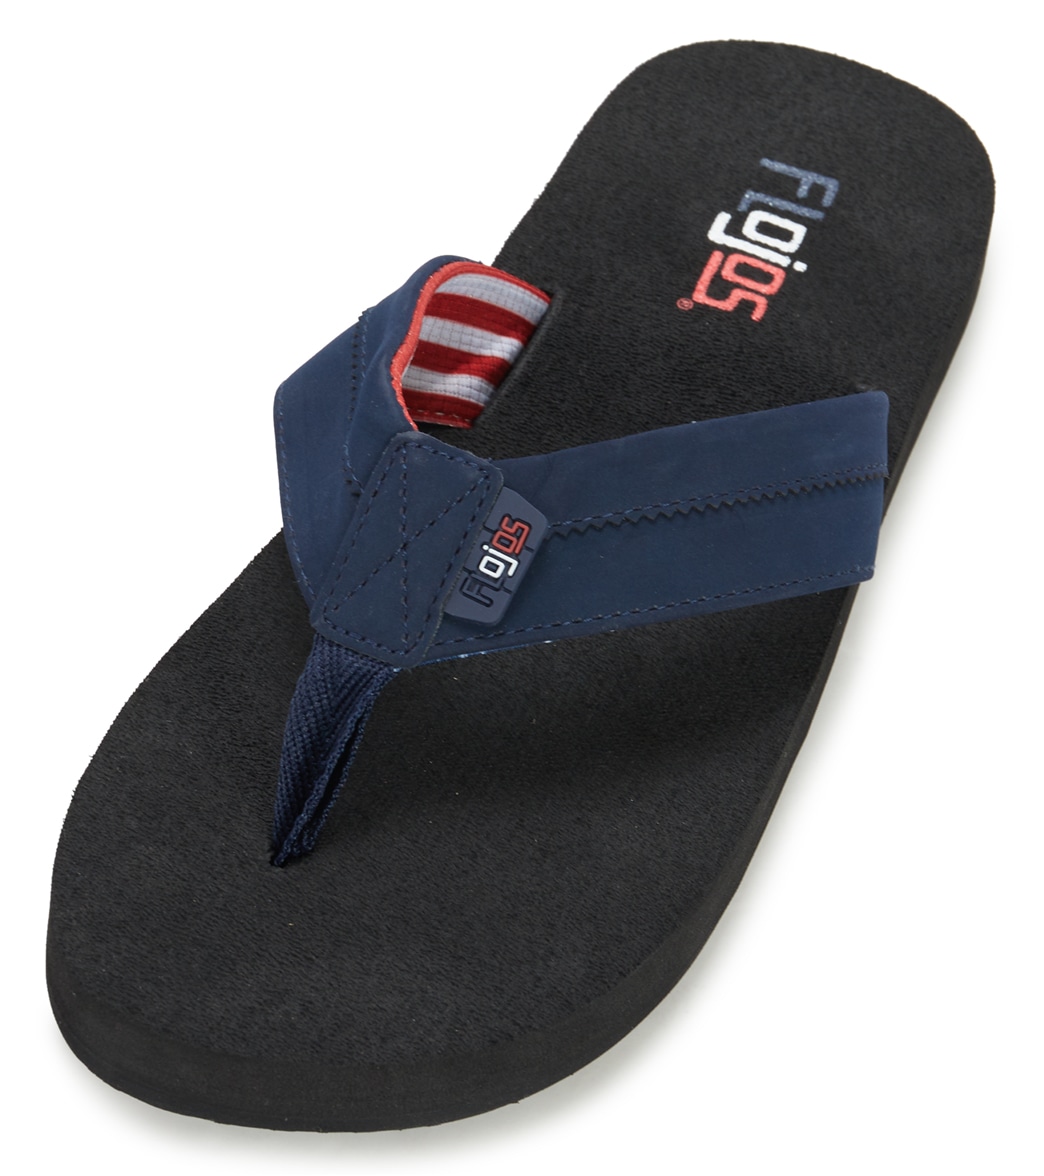 Flojos Men's Bandera Flip Flop - Navy/Black/Usa 10 - Swimoutlet.com